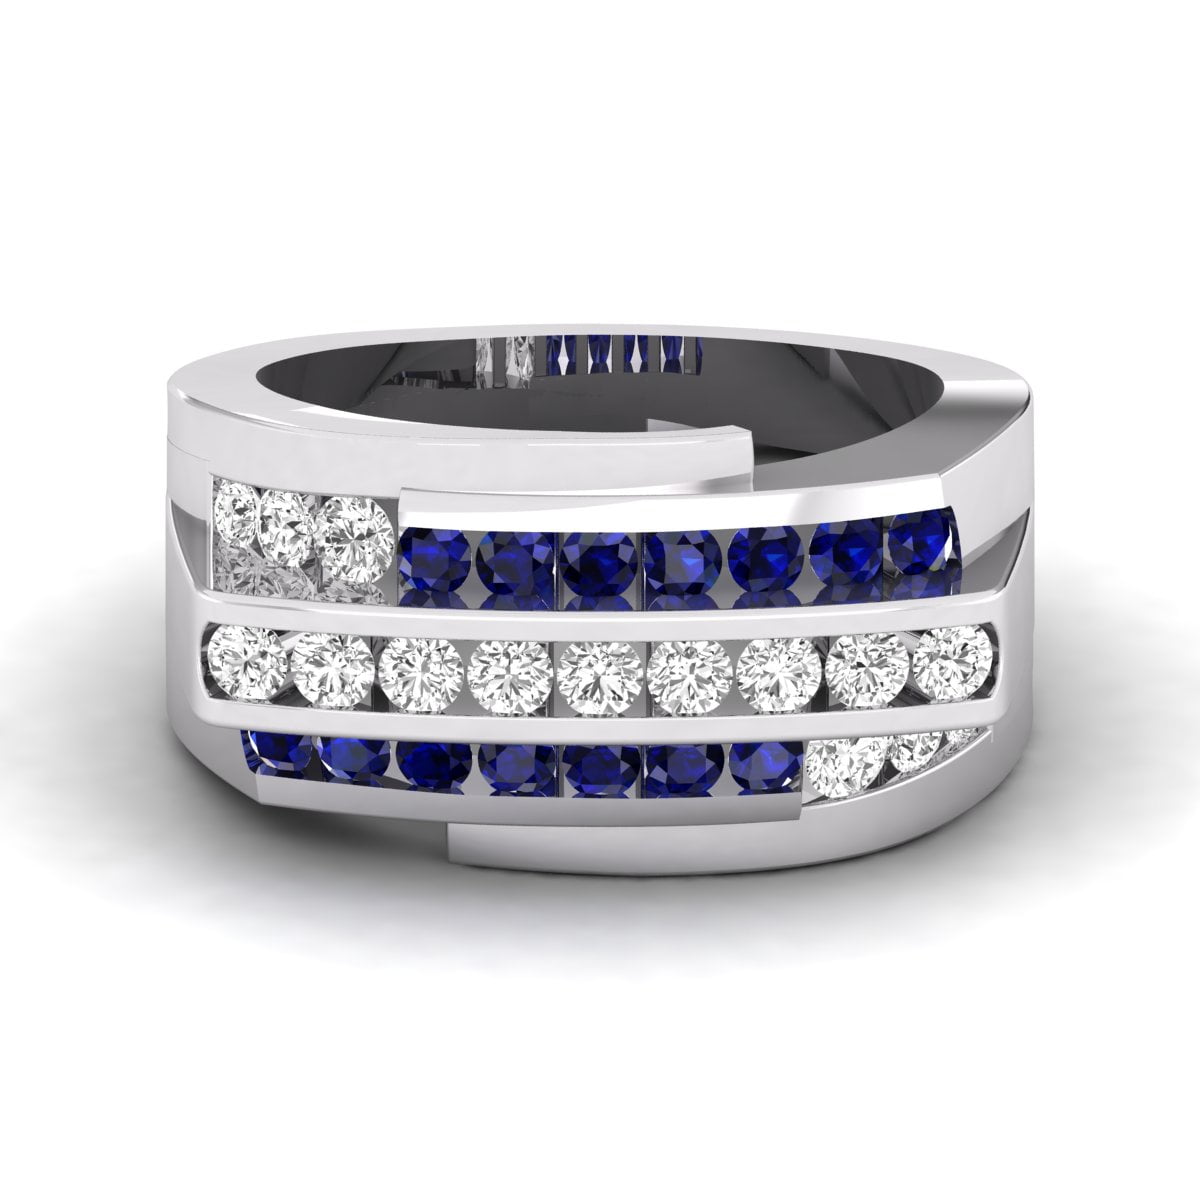 Blue Sapphire & White Round CZ Stone Men's Ring For Wedding-Proposal